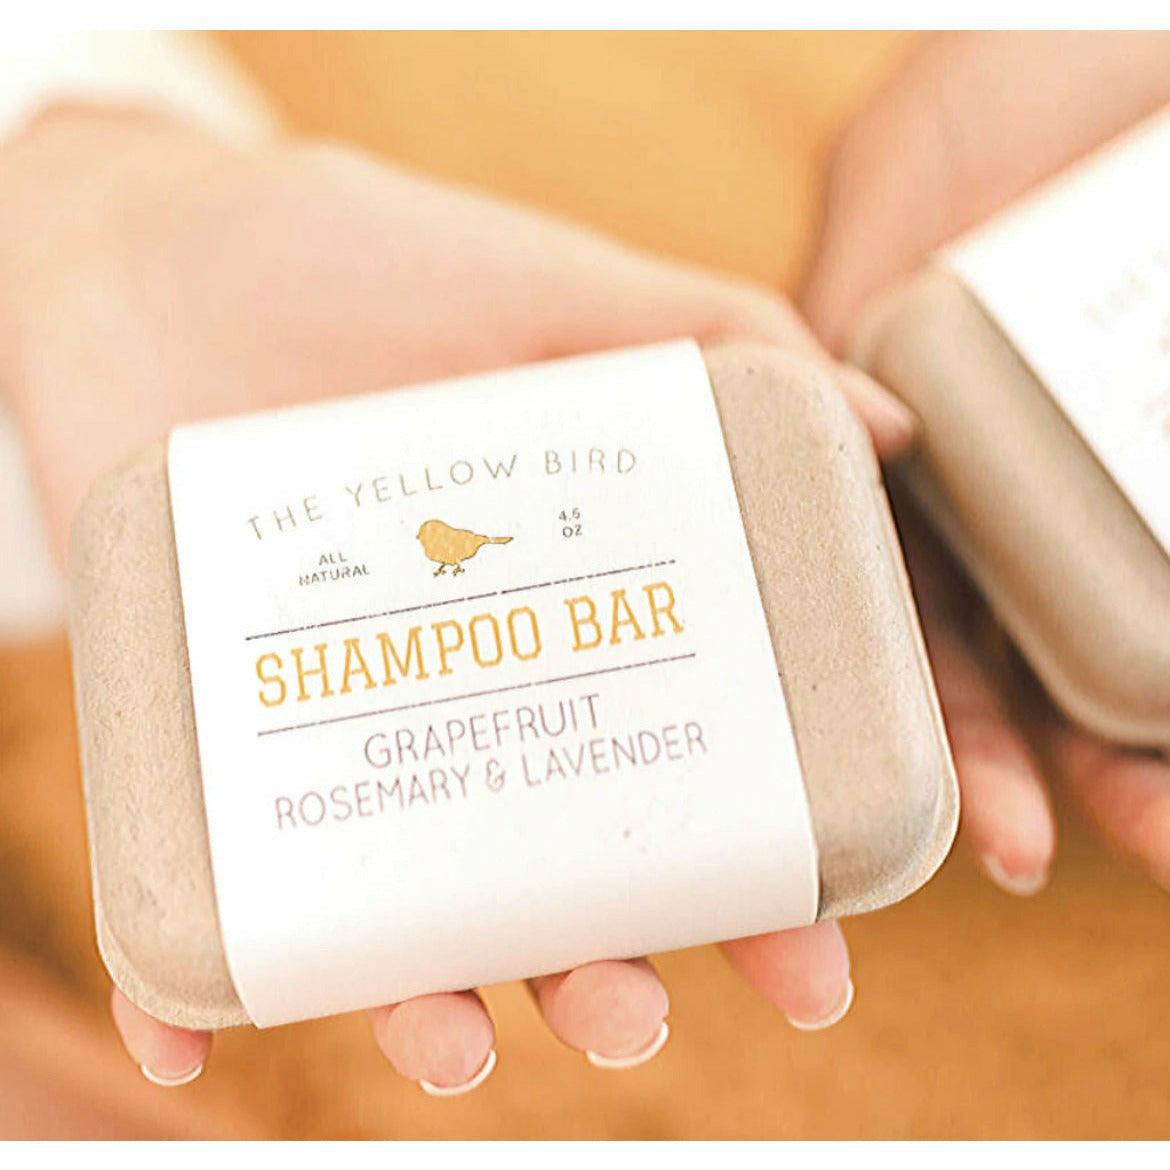 Bar Shampoo by The Yellow Bird, - Grapefruit Rosemary Lavender - Ninth & Pine